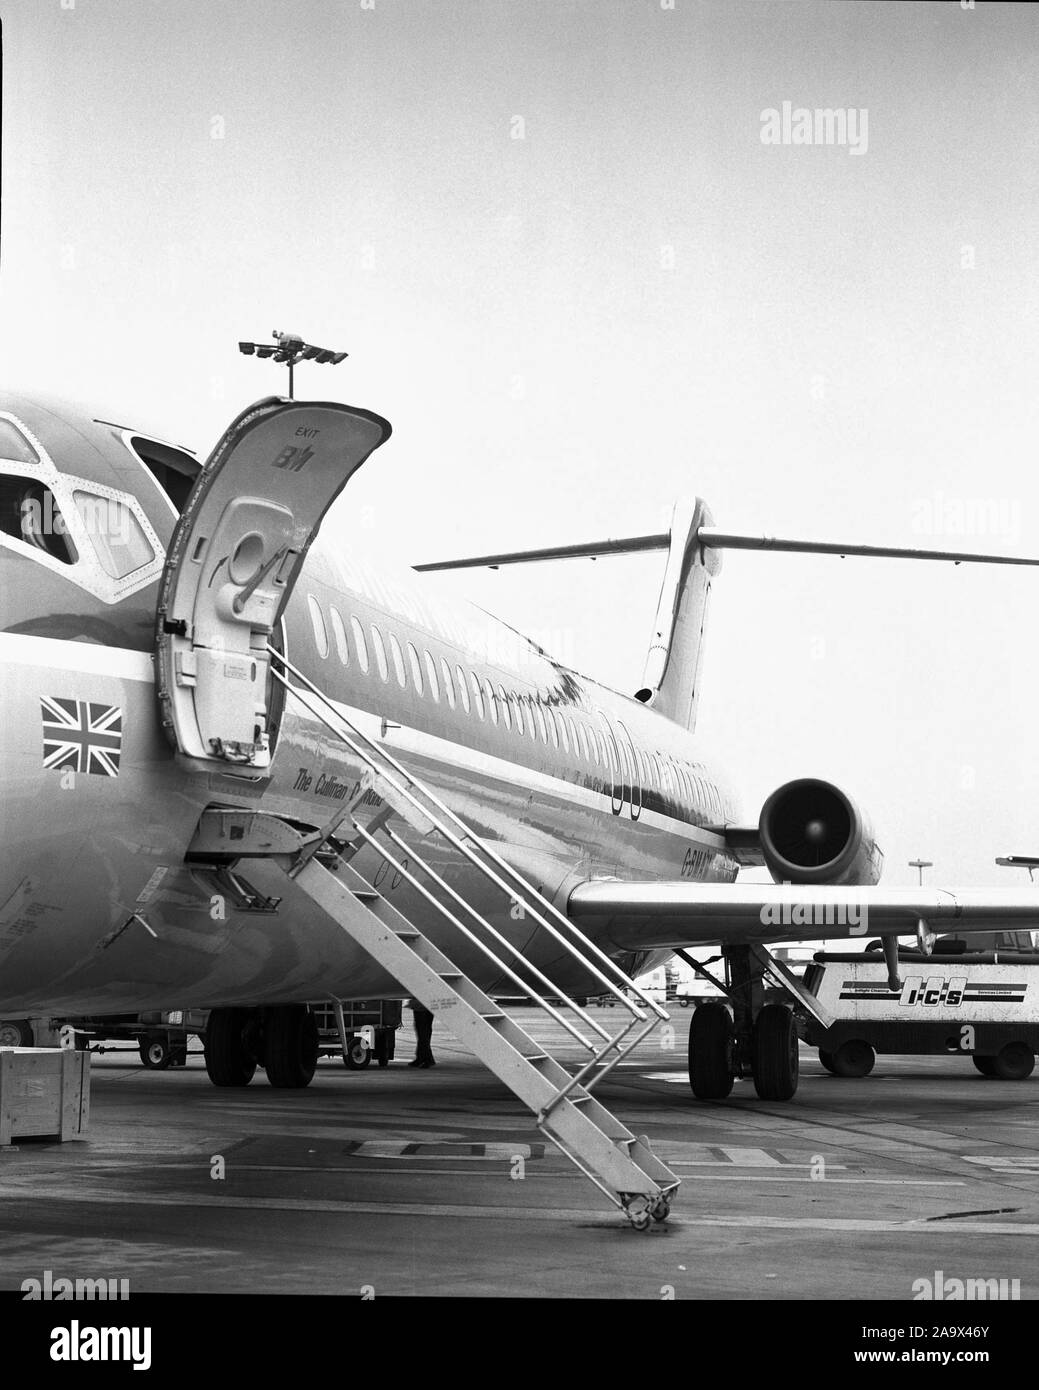 1988 British Midlands aircraft at Yeadon Airport, now Leeds Bradford, West Yorkshire, Northern England, UK Stock Photo